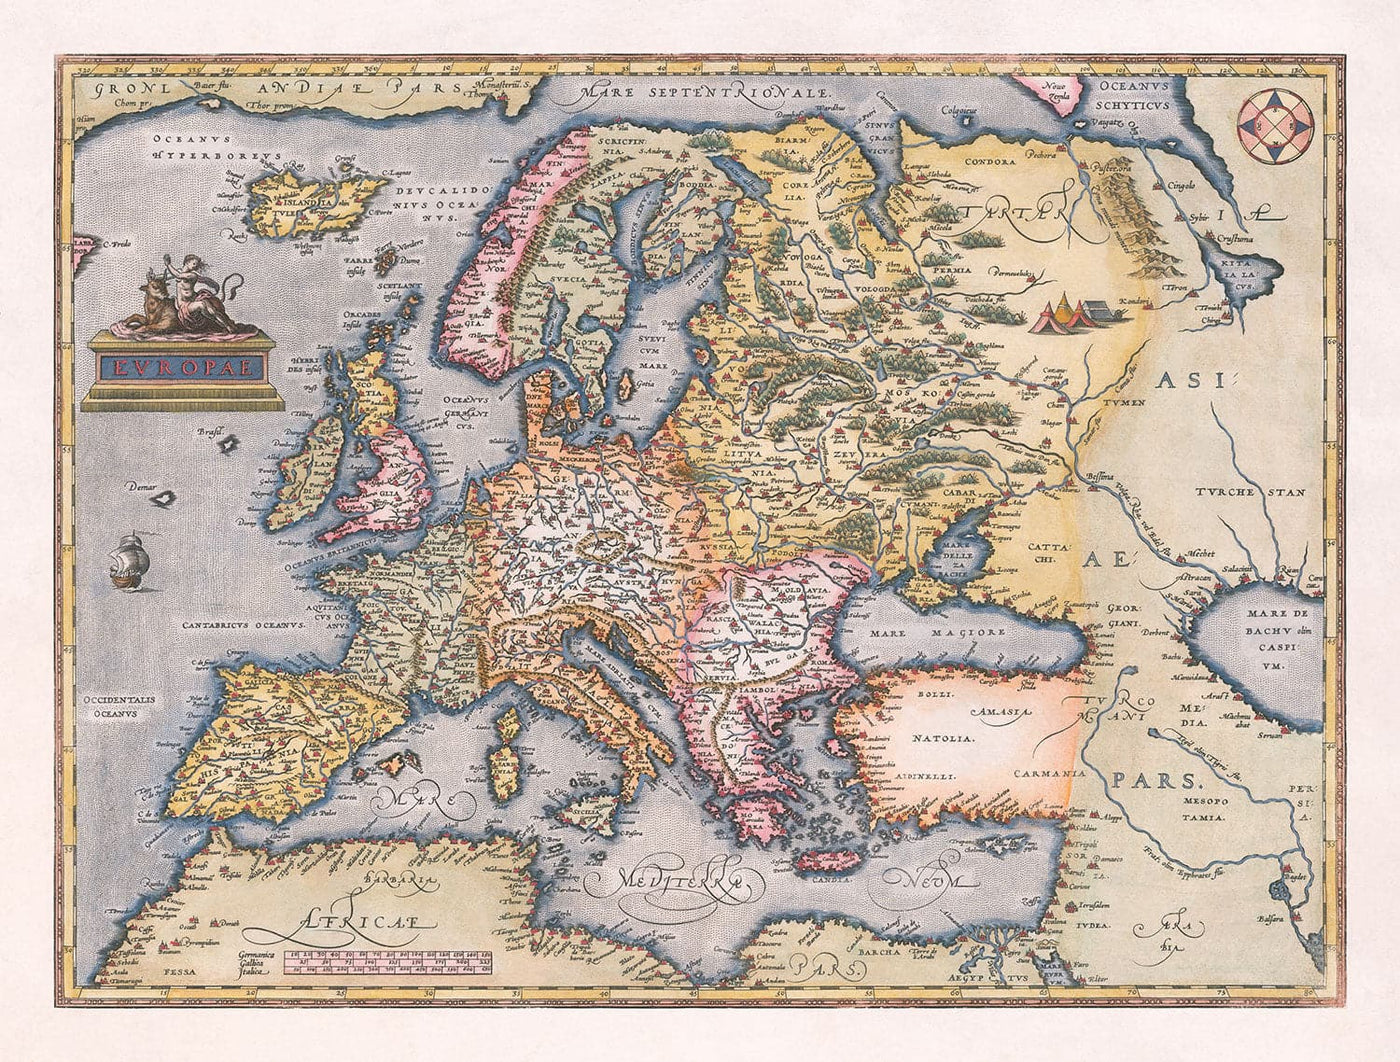 Mapa antiguo de Europa, 1570 - El primer atlas europeo - de Abraham Ortelius